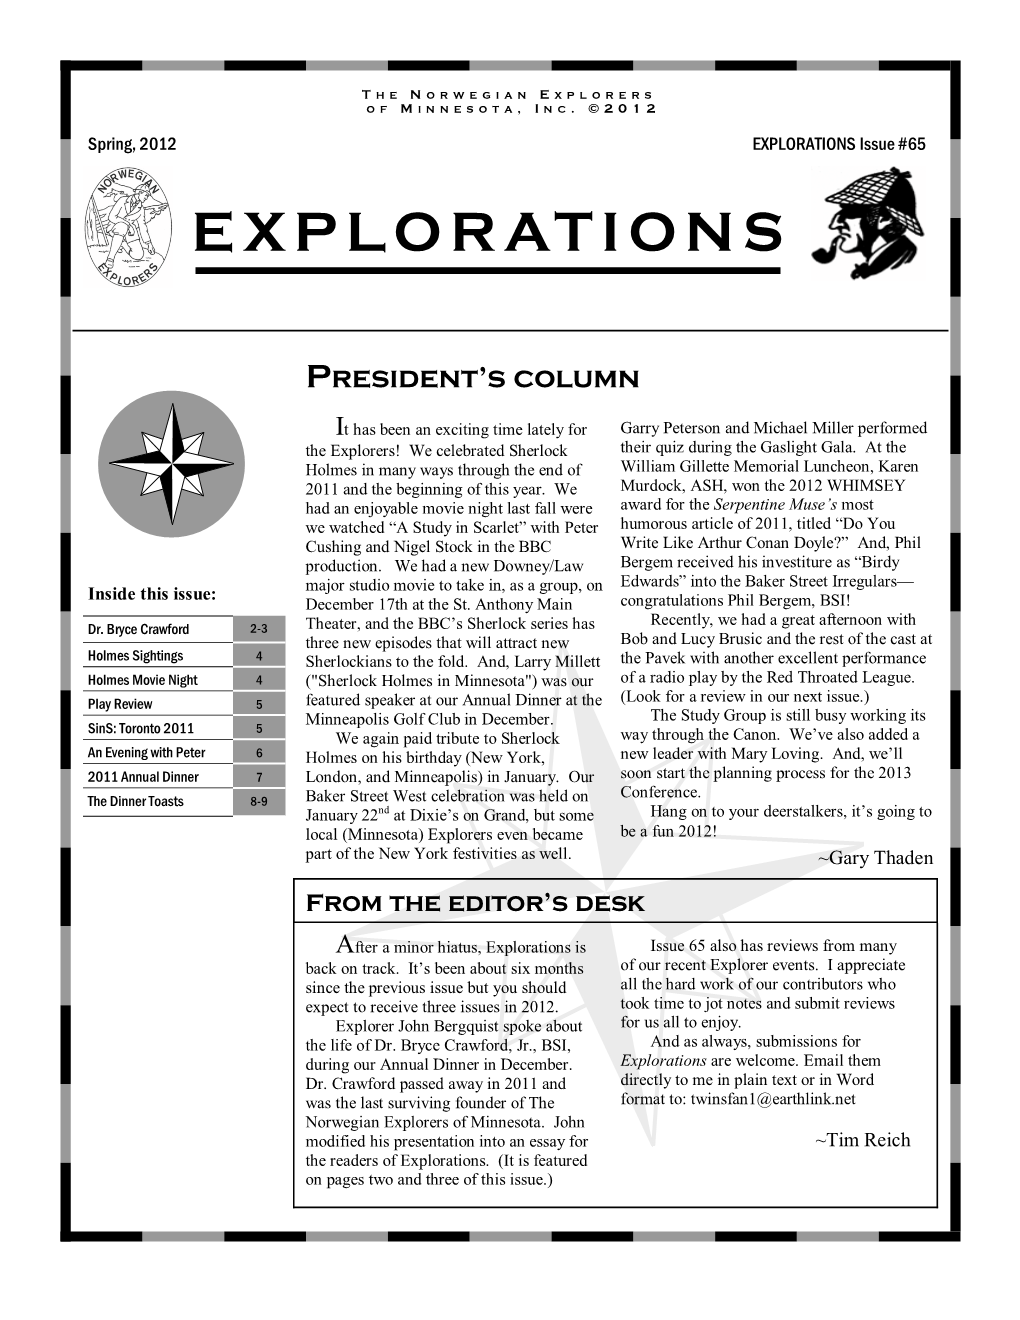 EXPLORATIONS Issue #65 EXPLORATIONS